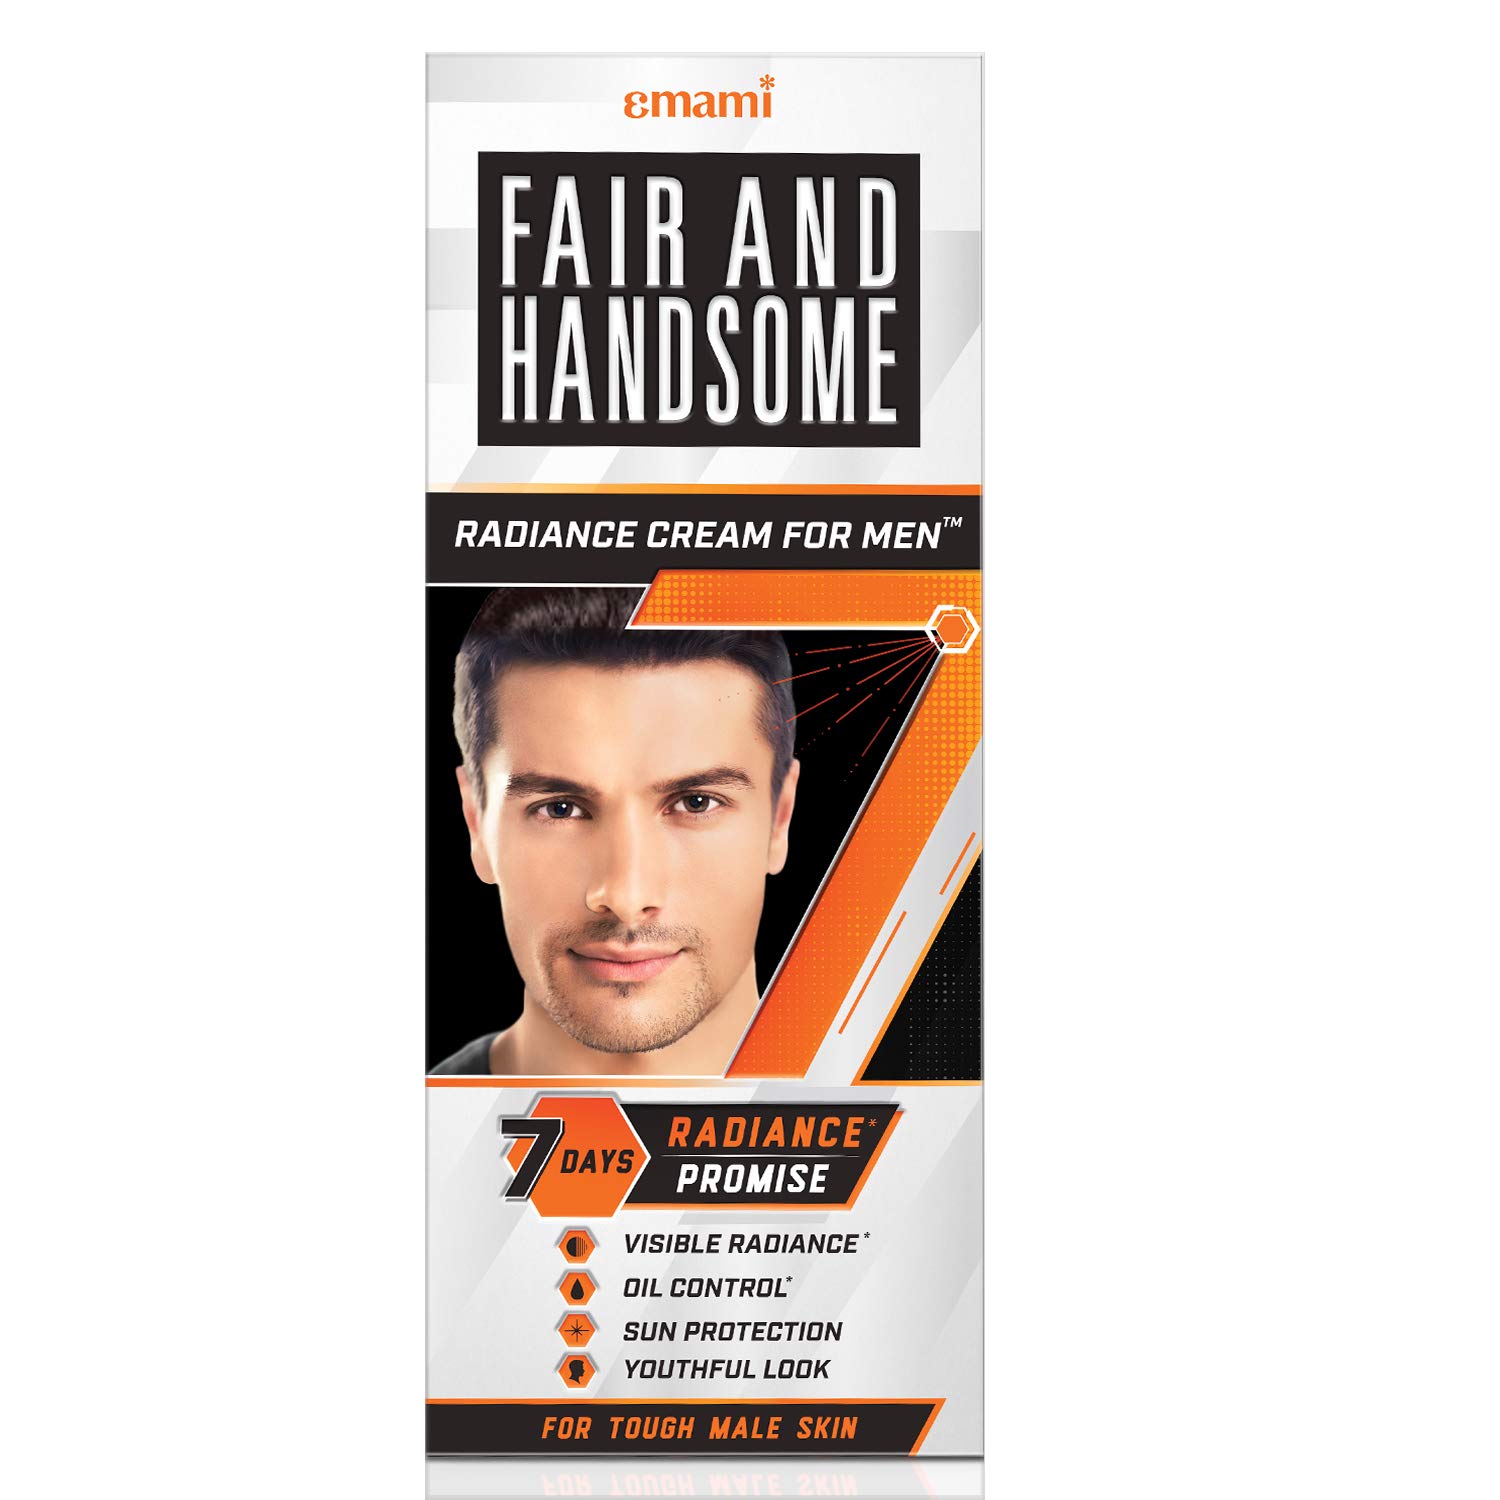 Emami fair & handsome radiance cream for men